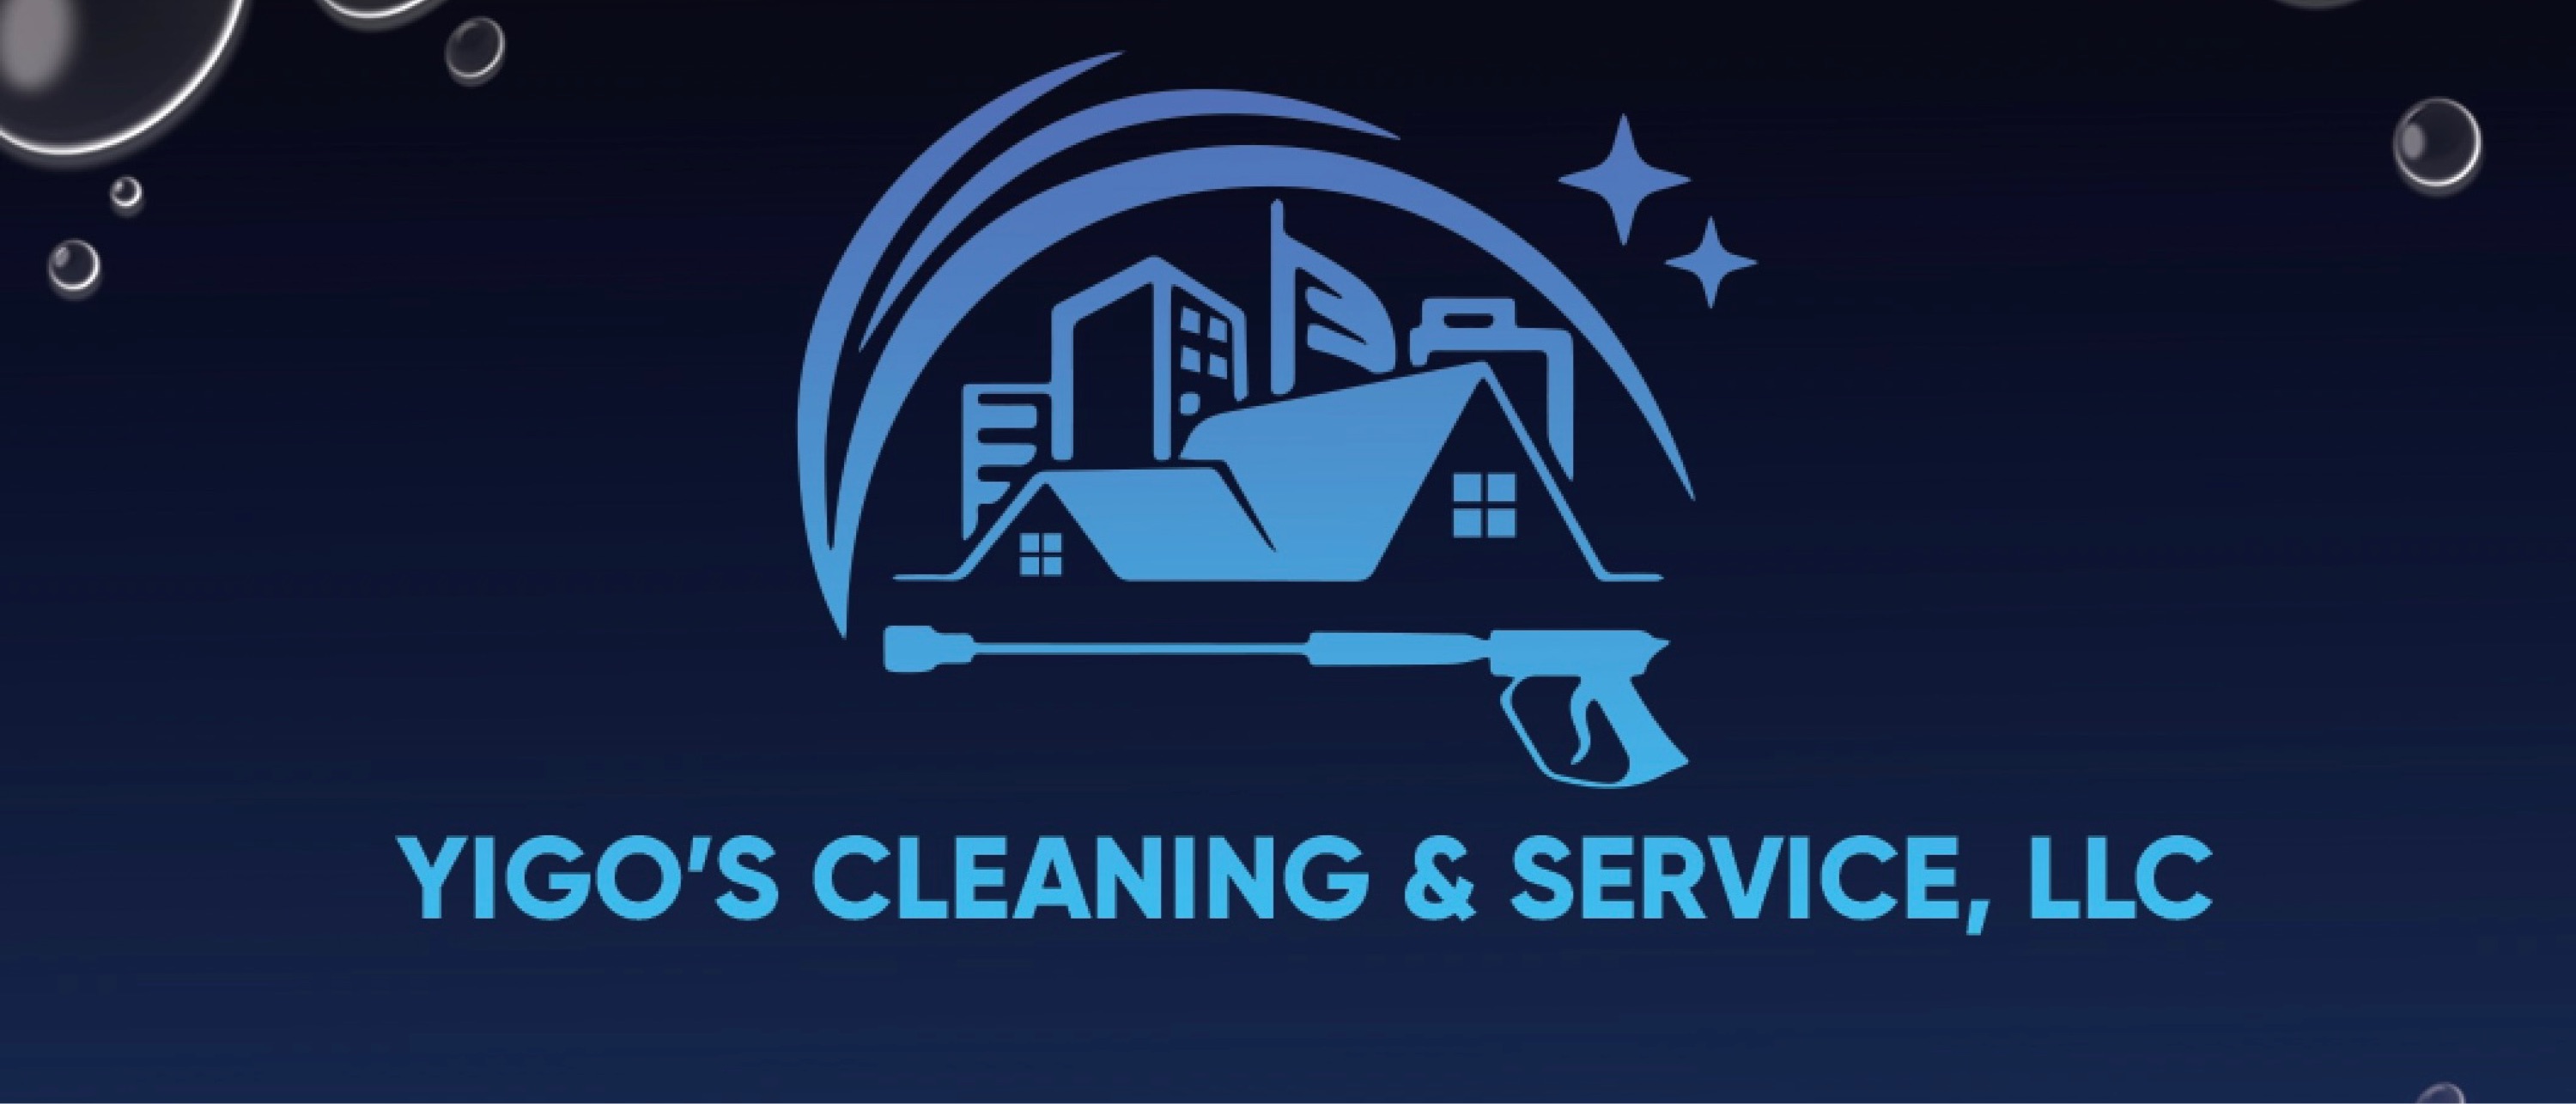 Yigo's Cleaning & Service, LLC Logo